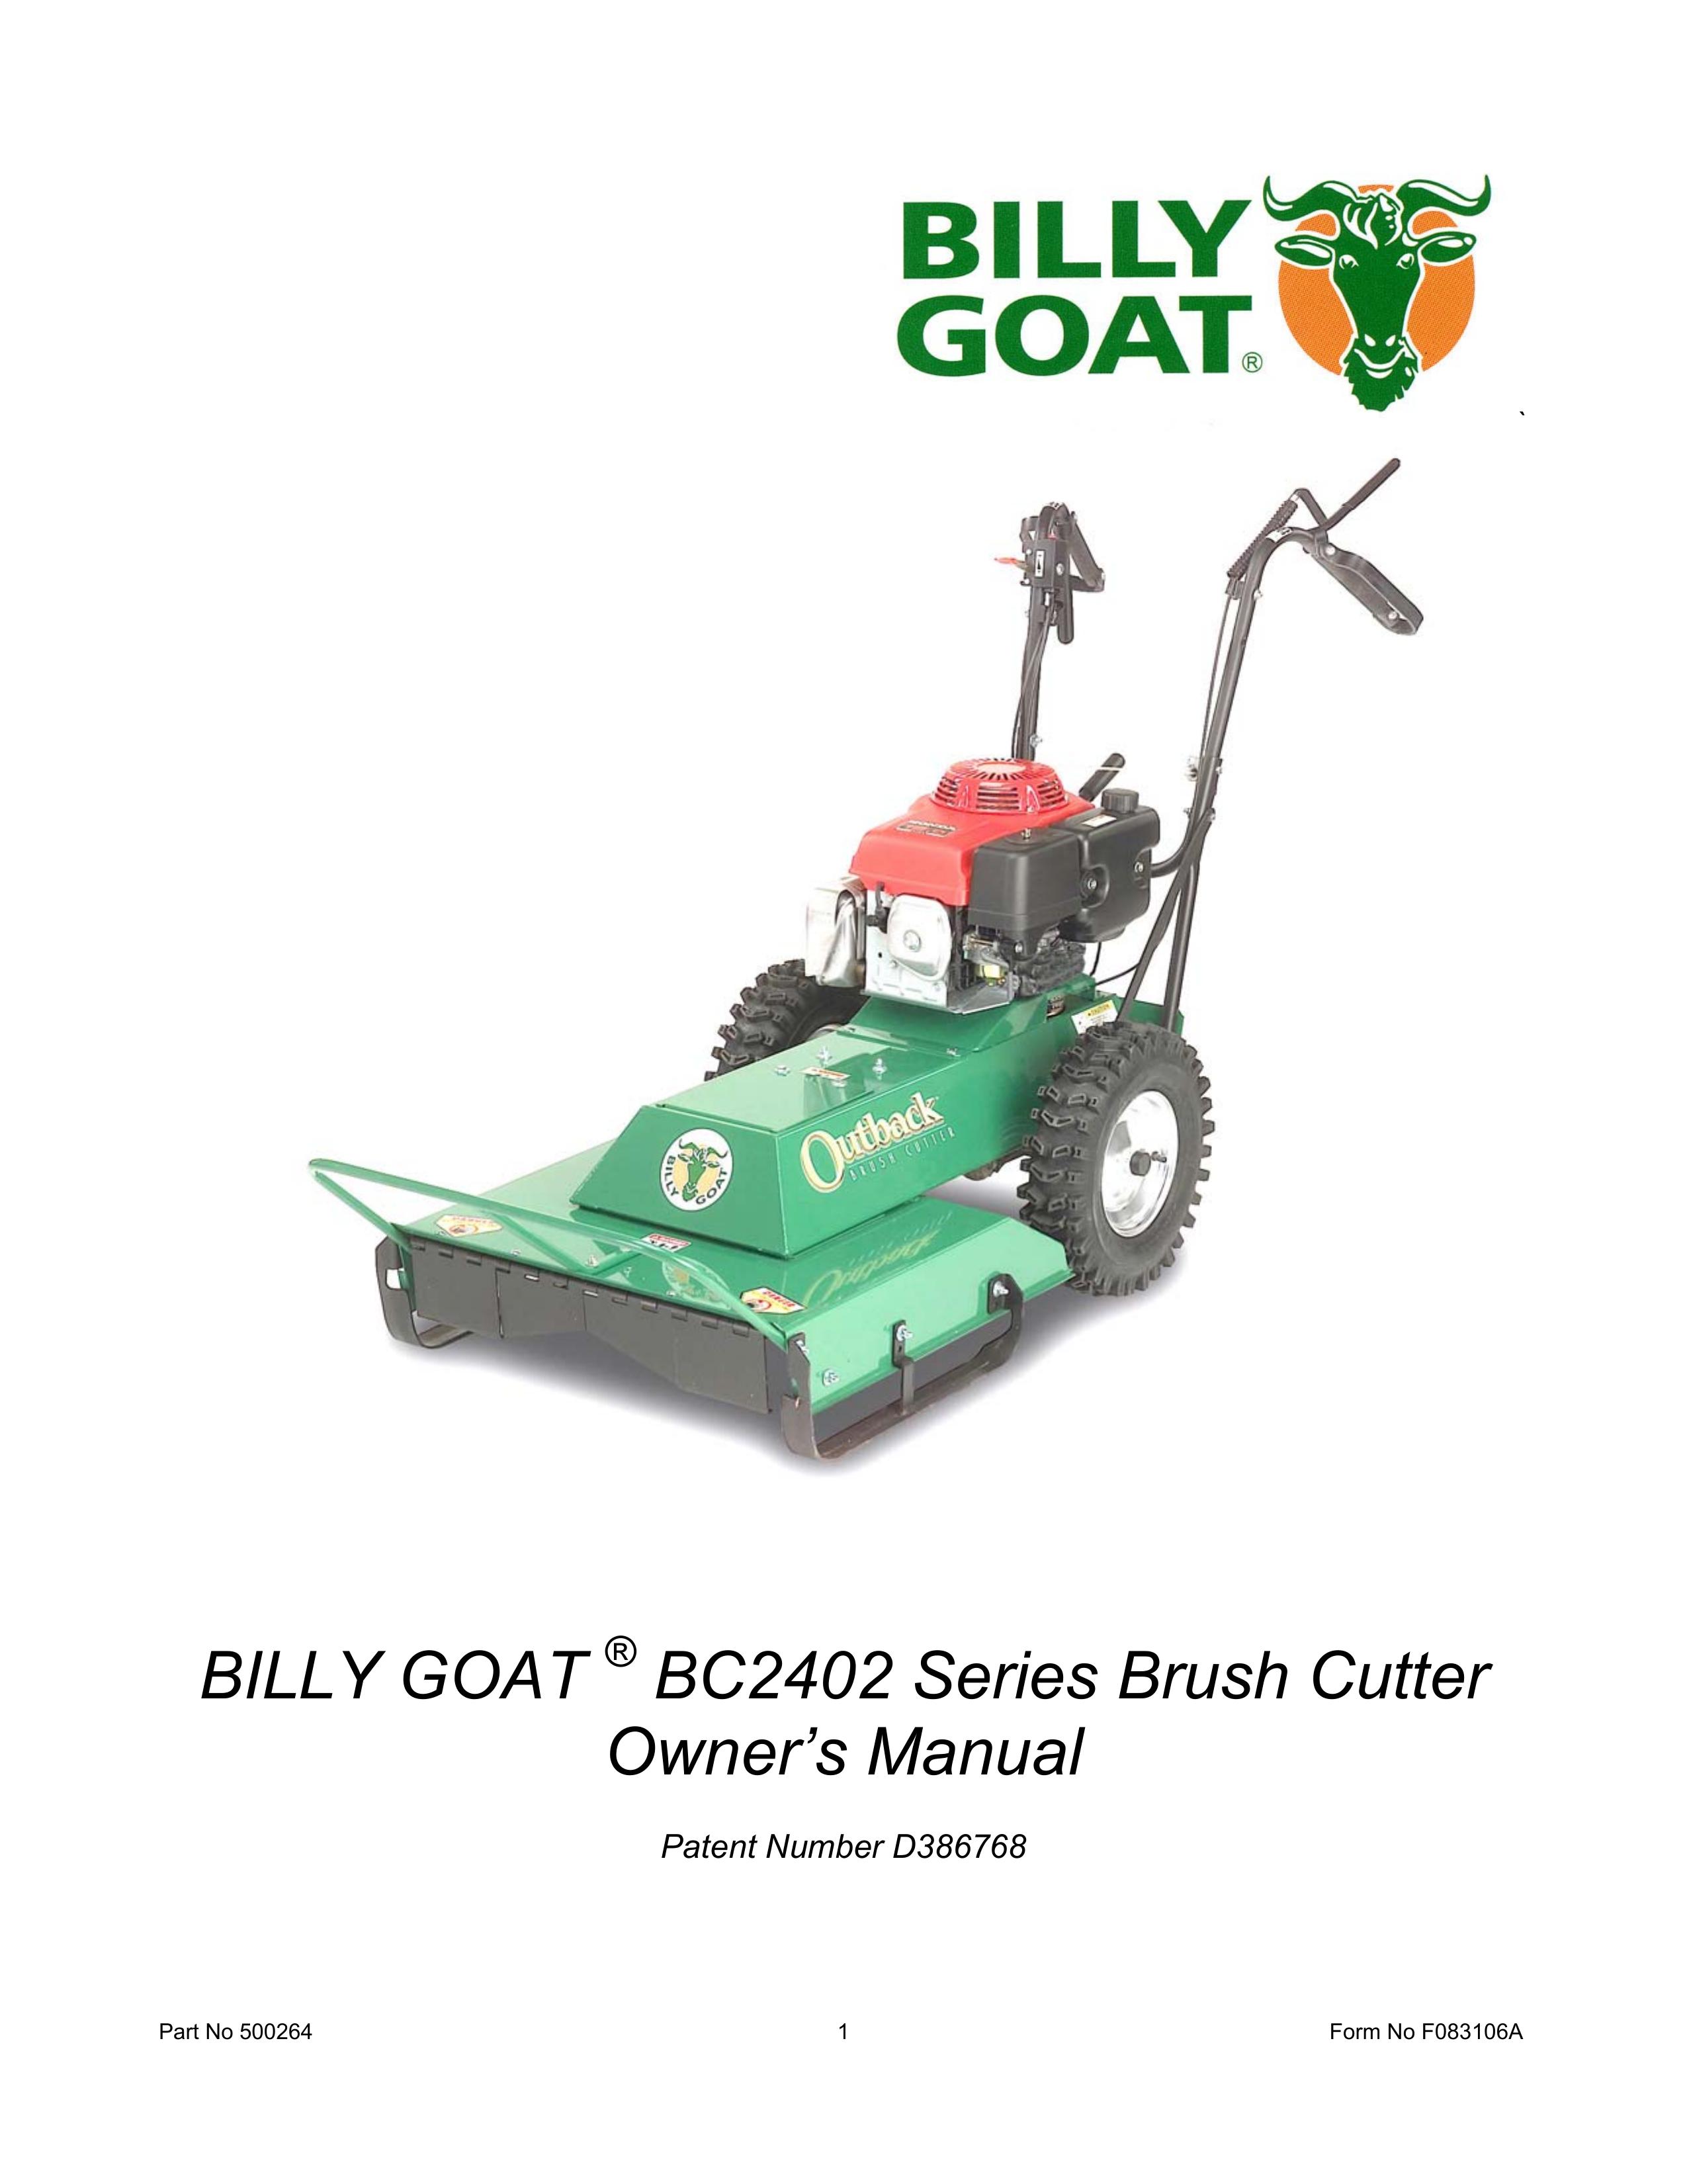 Billy Goat BC2402 Brush Cutter User Manual